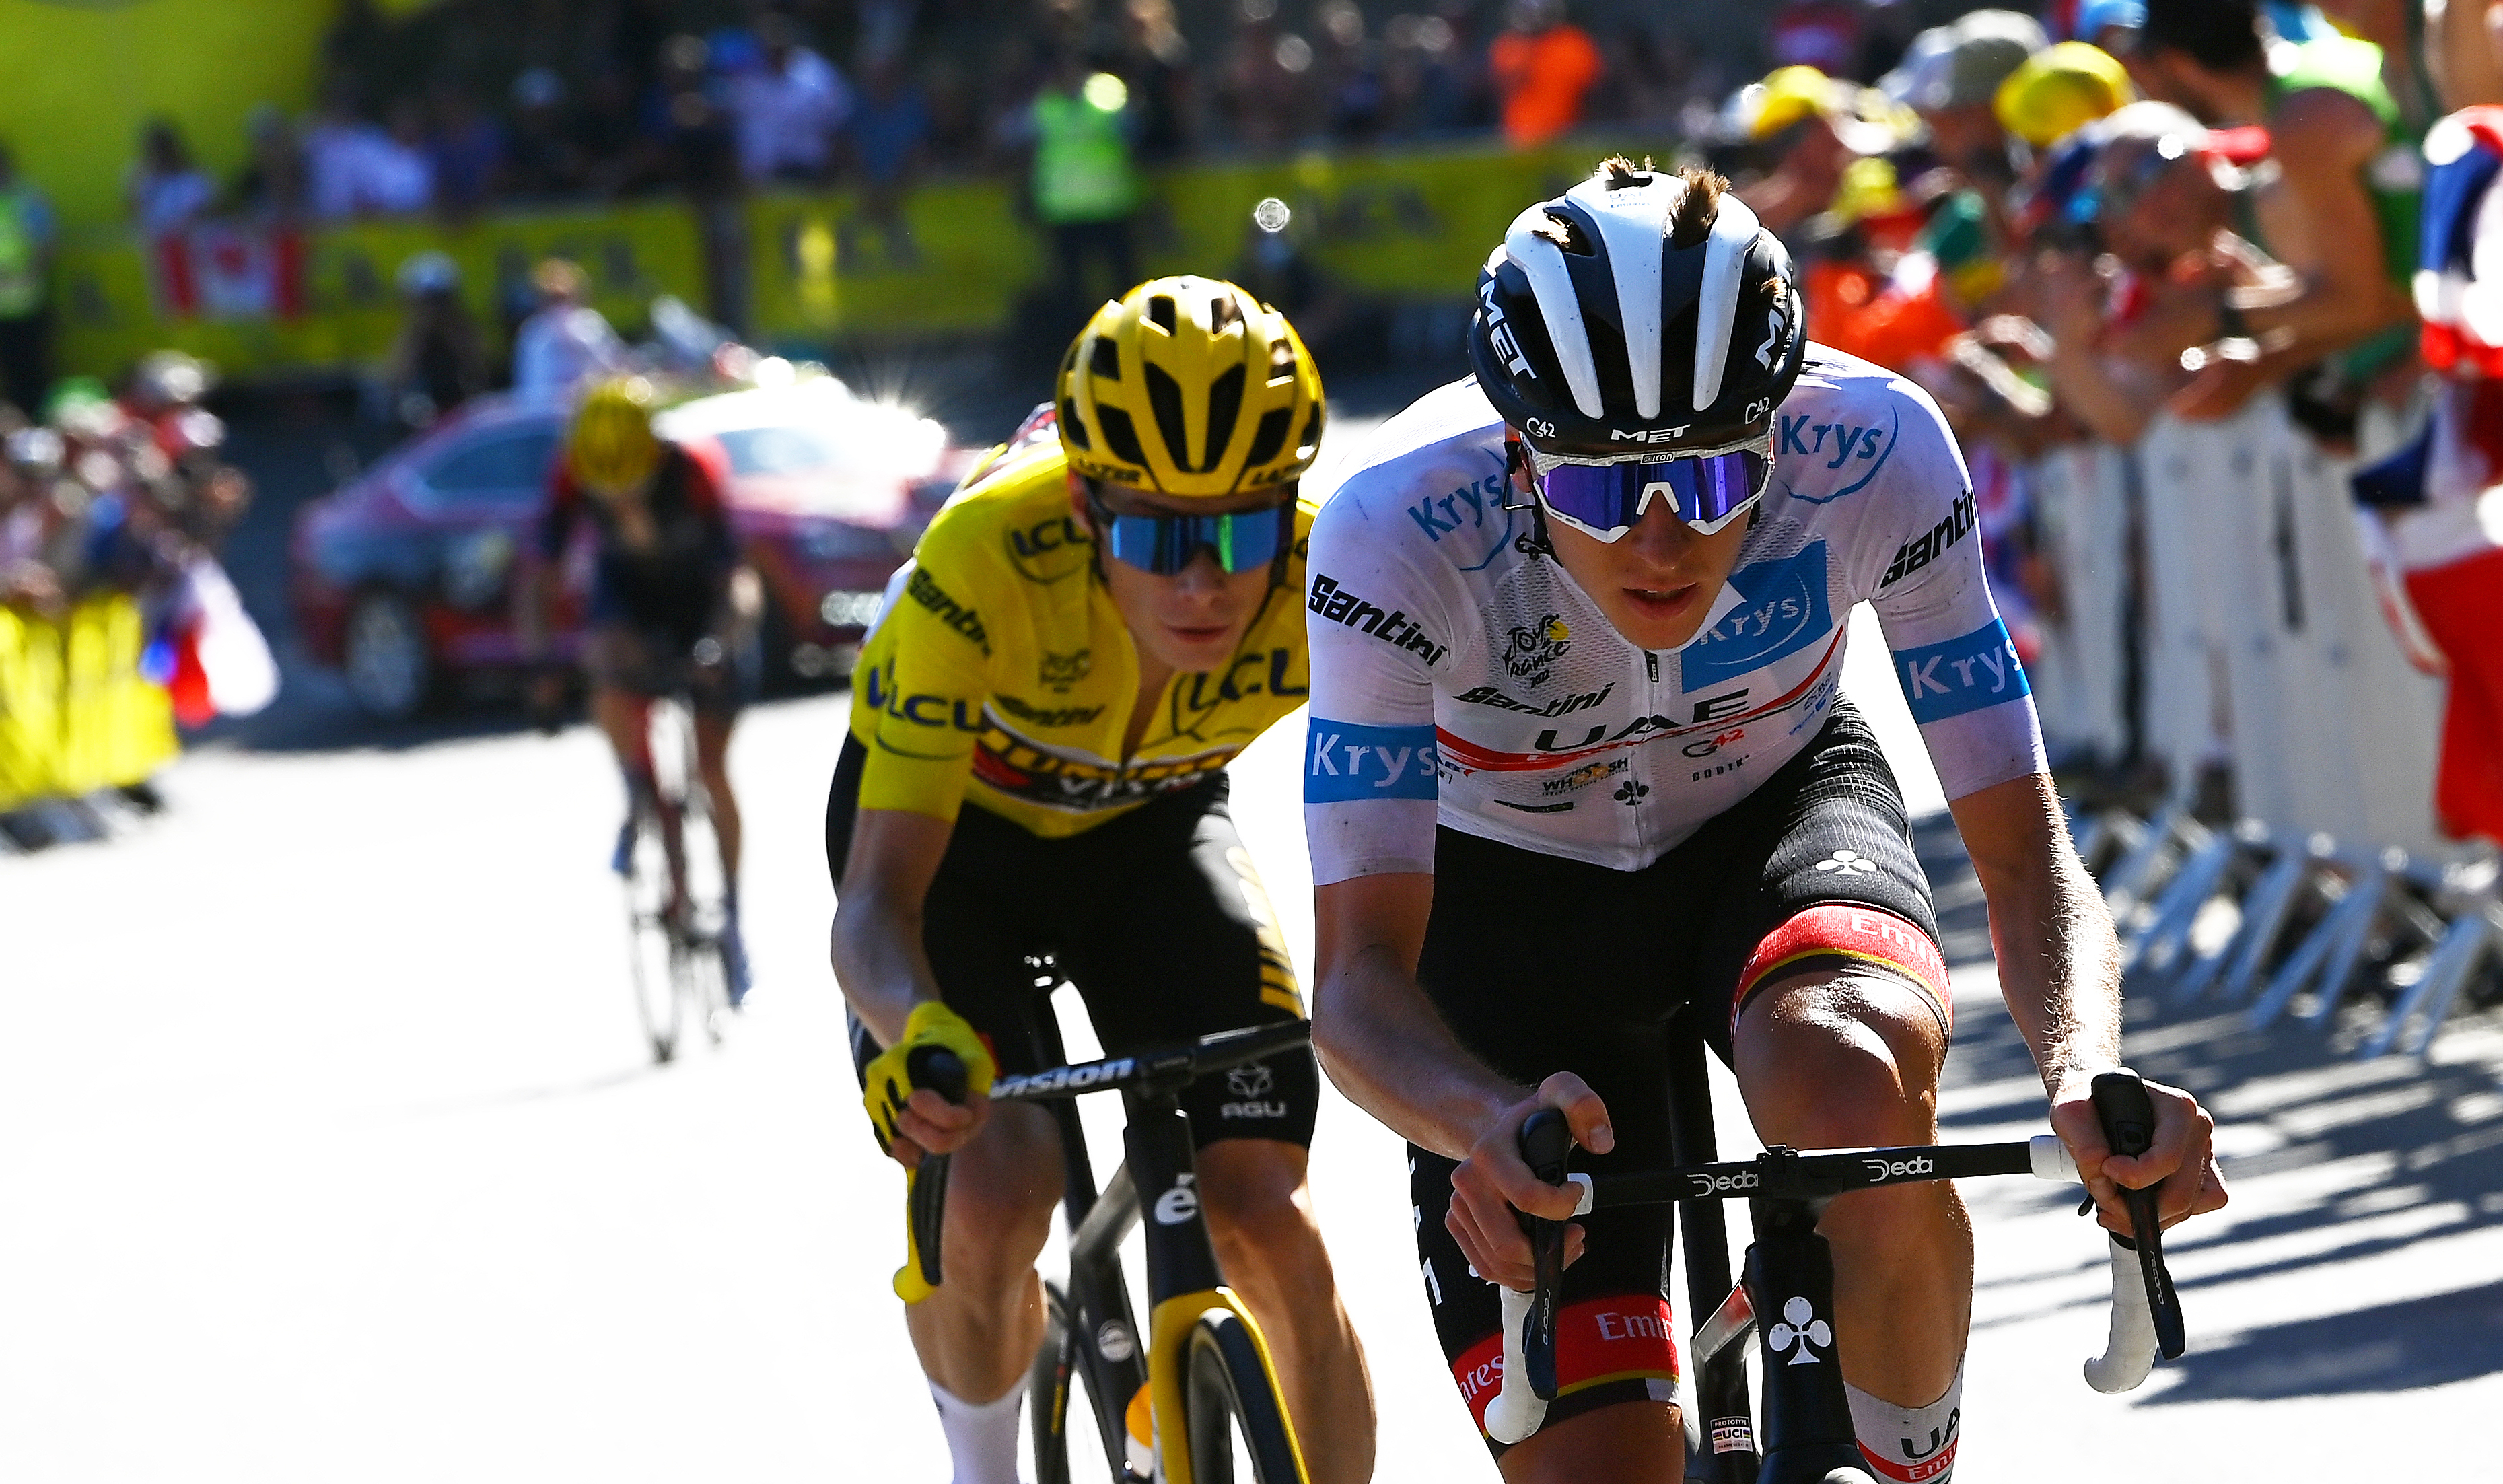 Tadej Pogacar and Jonas Vingegaard attack at the 2022 Tour de France